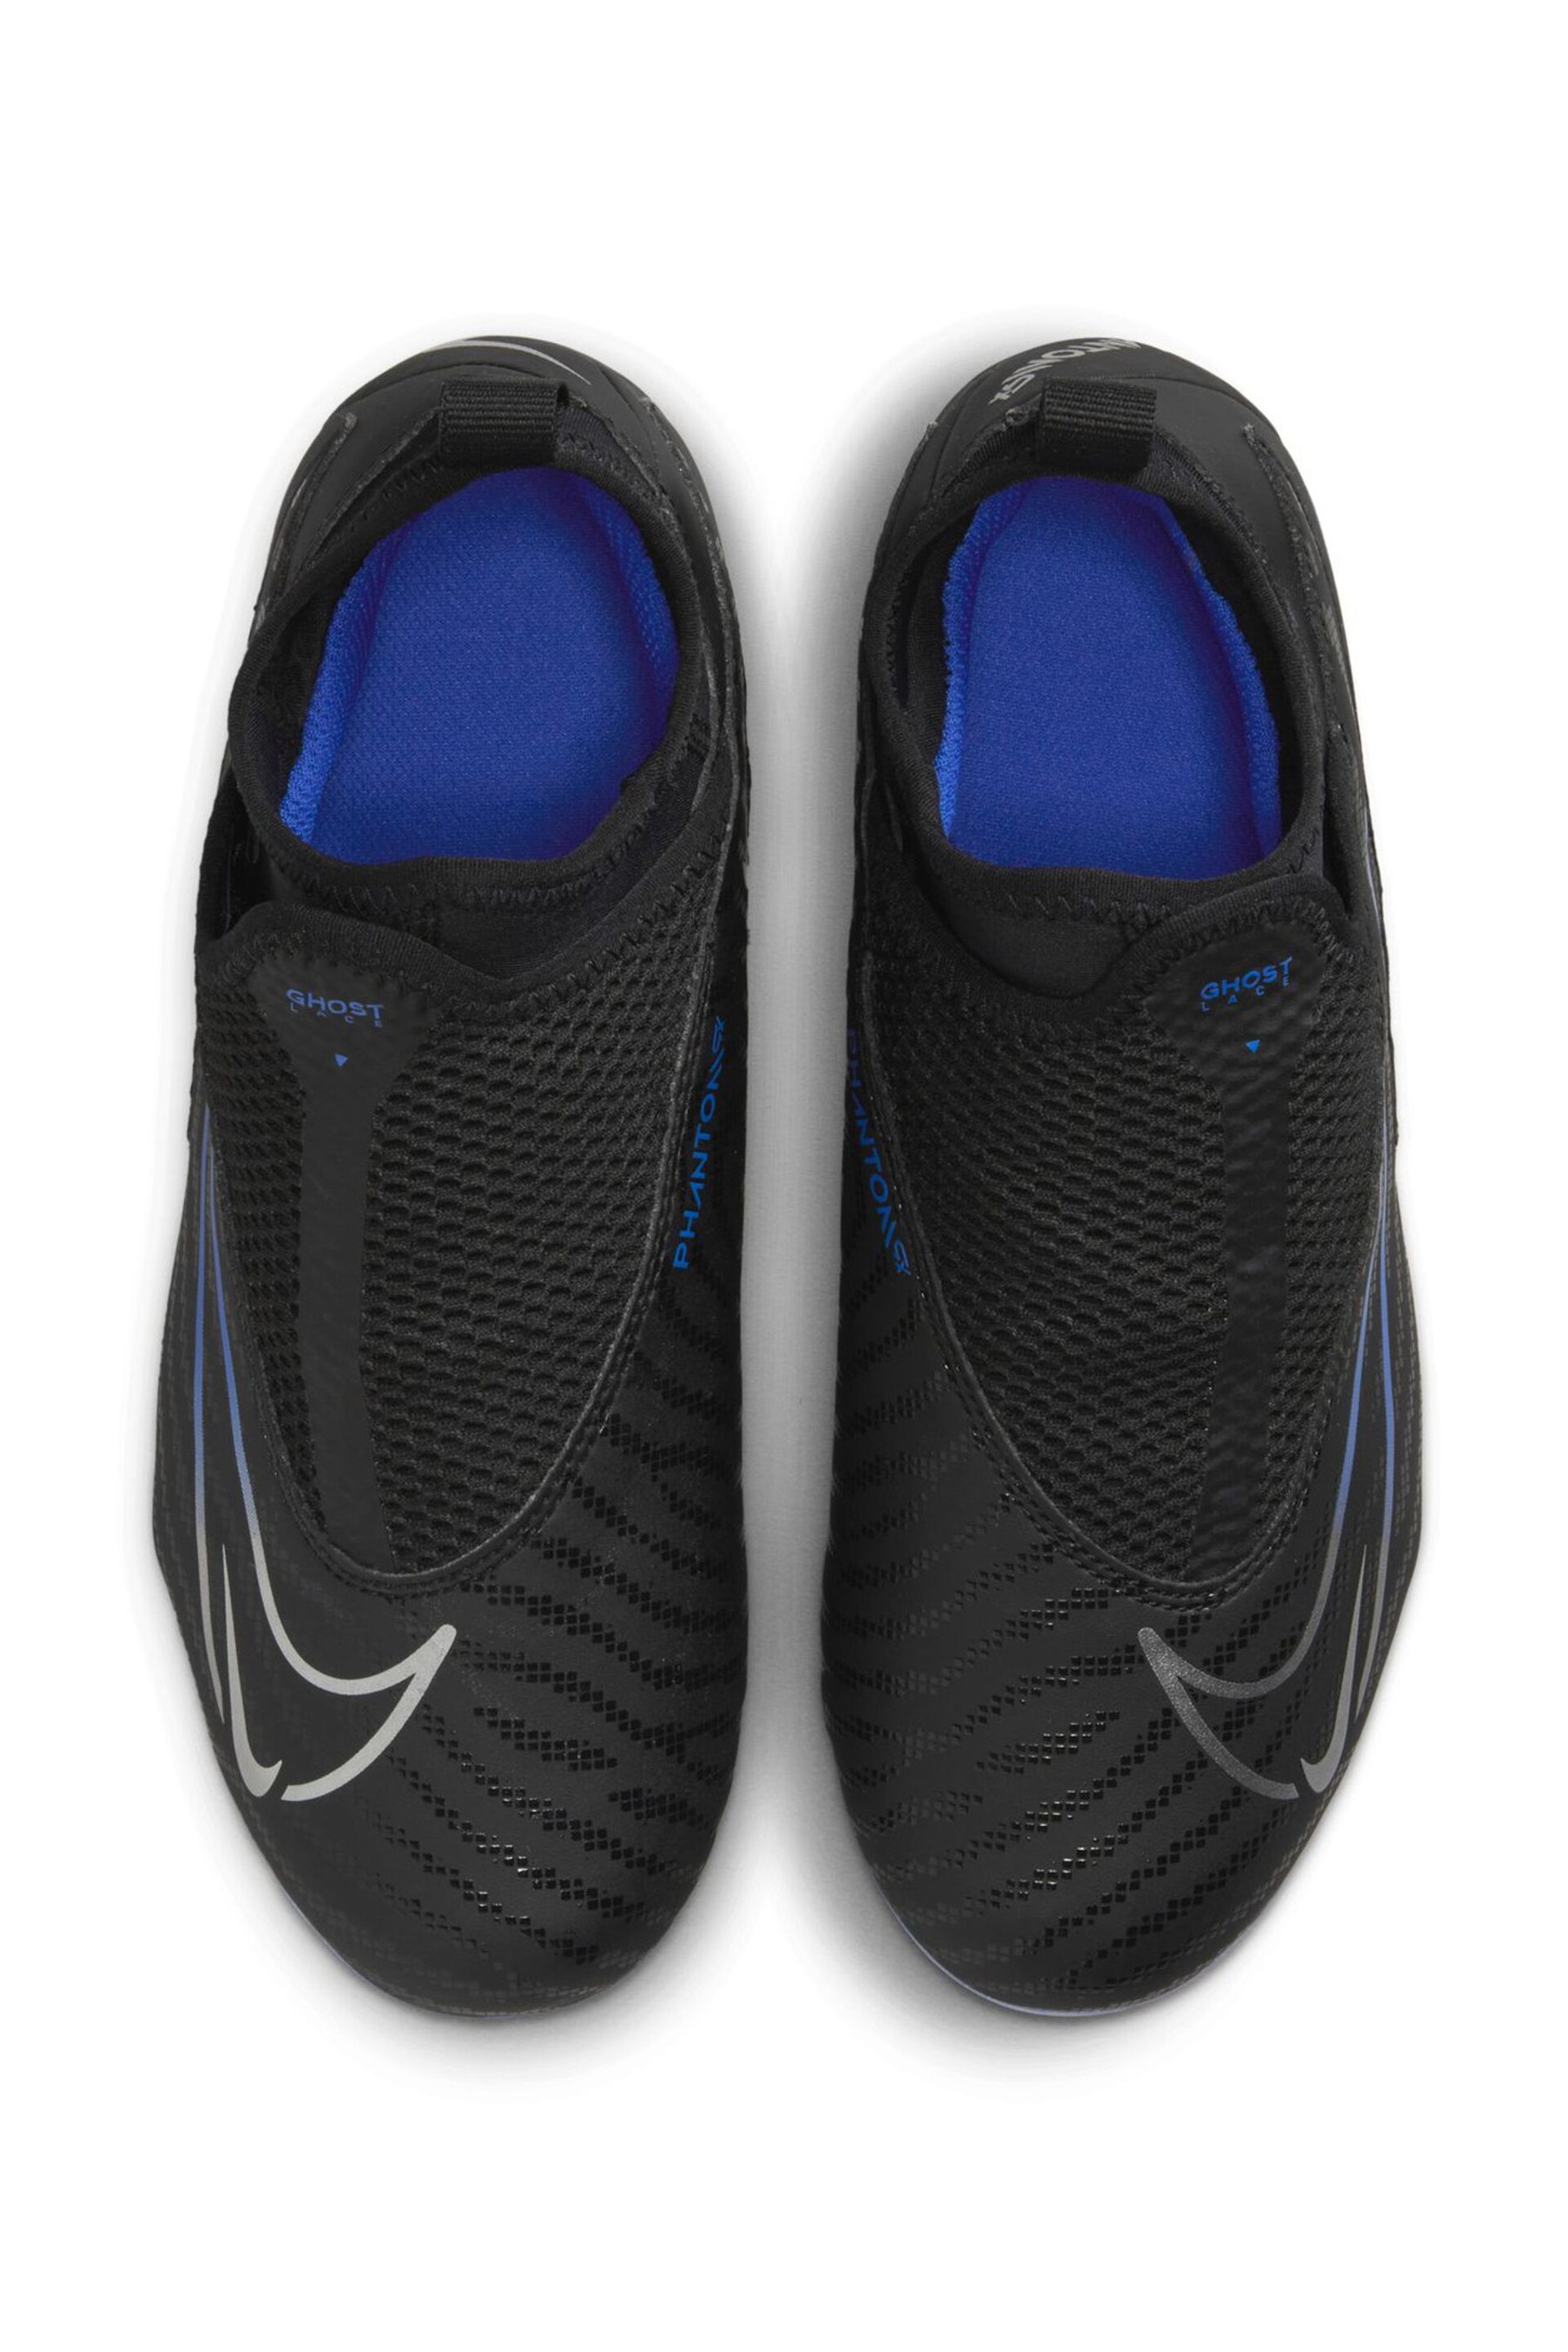 Nike Black Jr. Phantom Academy Firm Ground Football Boots - Image 5 of 10